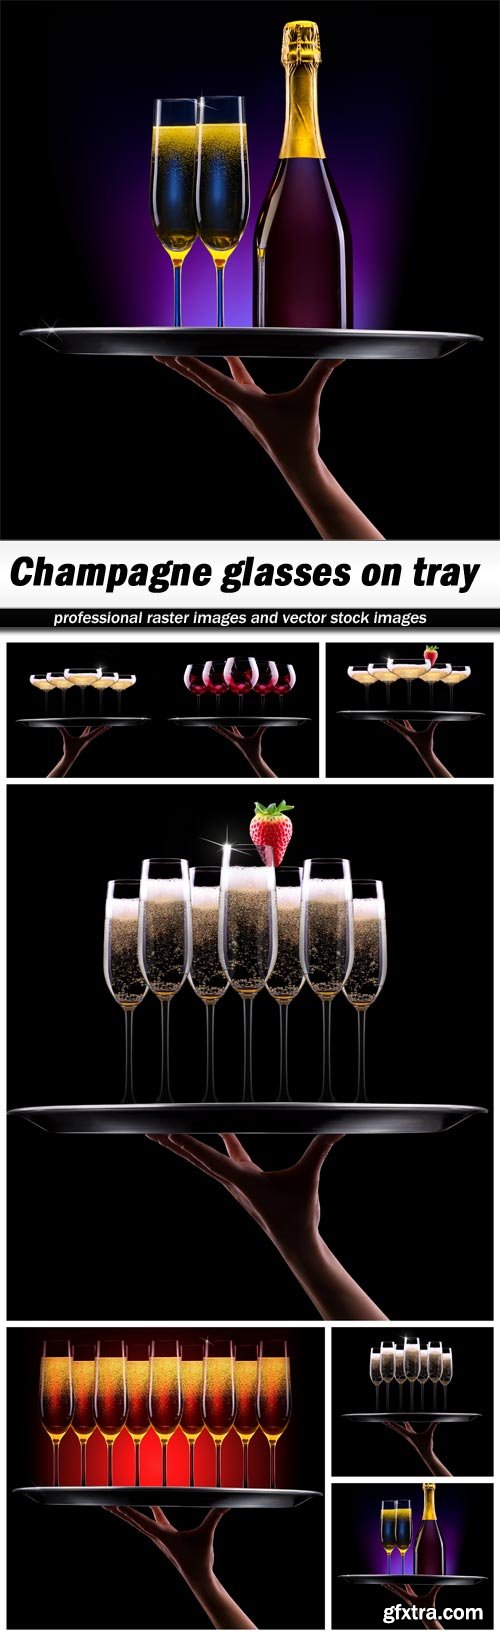 Champagne glasses on tray - 6 UHQ JPEG